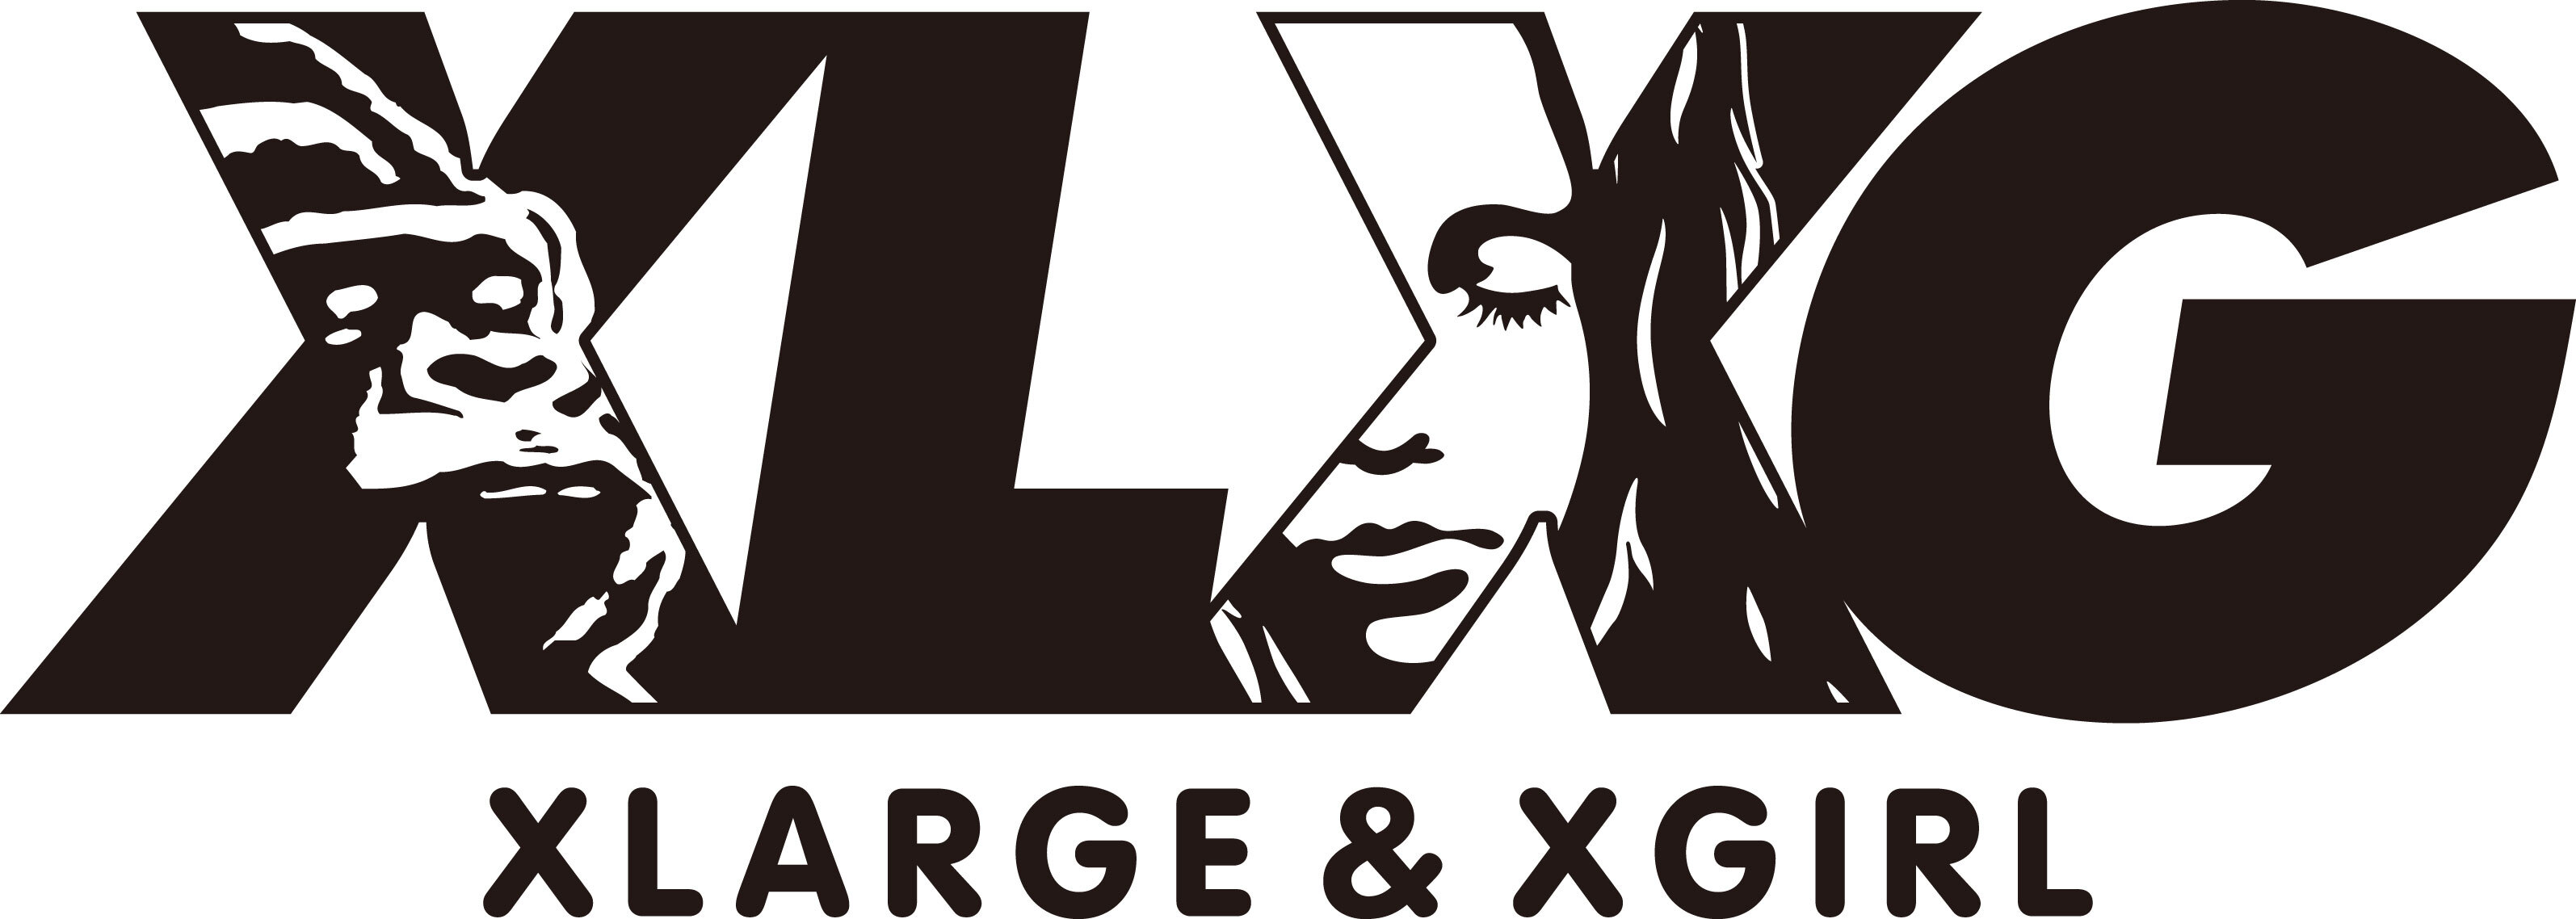 Xlarge R とx Girlのコラボレーションコレクション Xlarge X Girl 登場 株式会社ビーズインターナショナルのプレスリリース